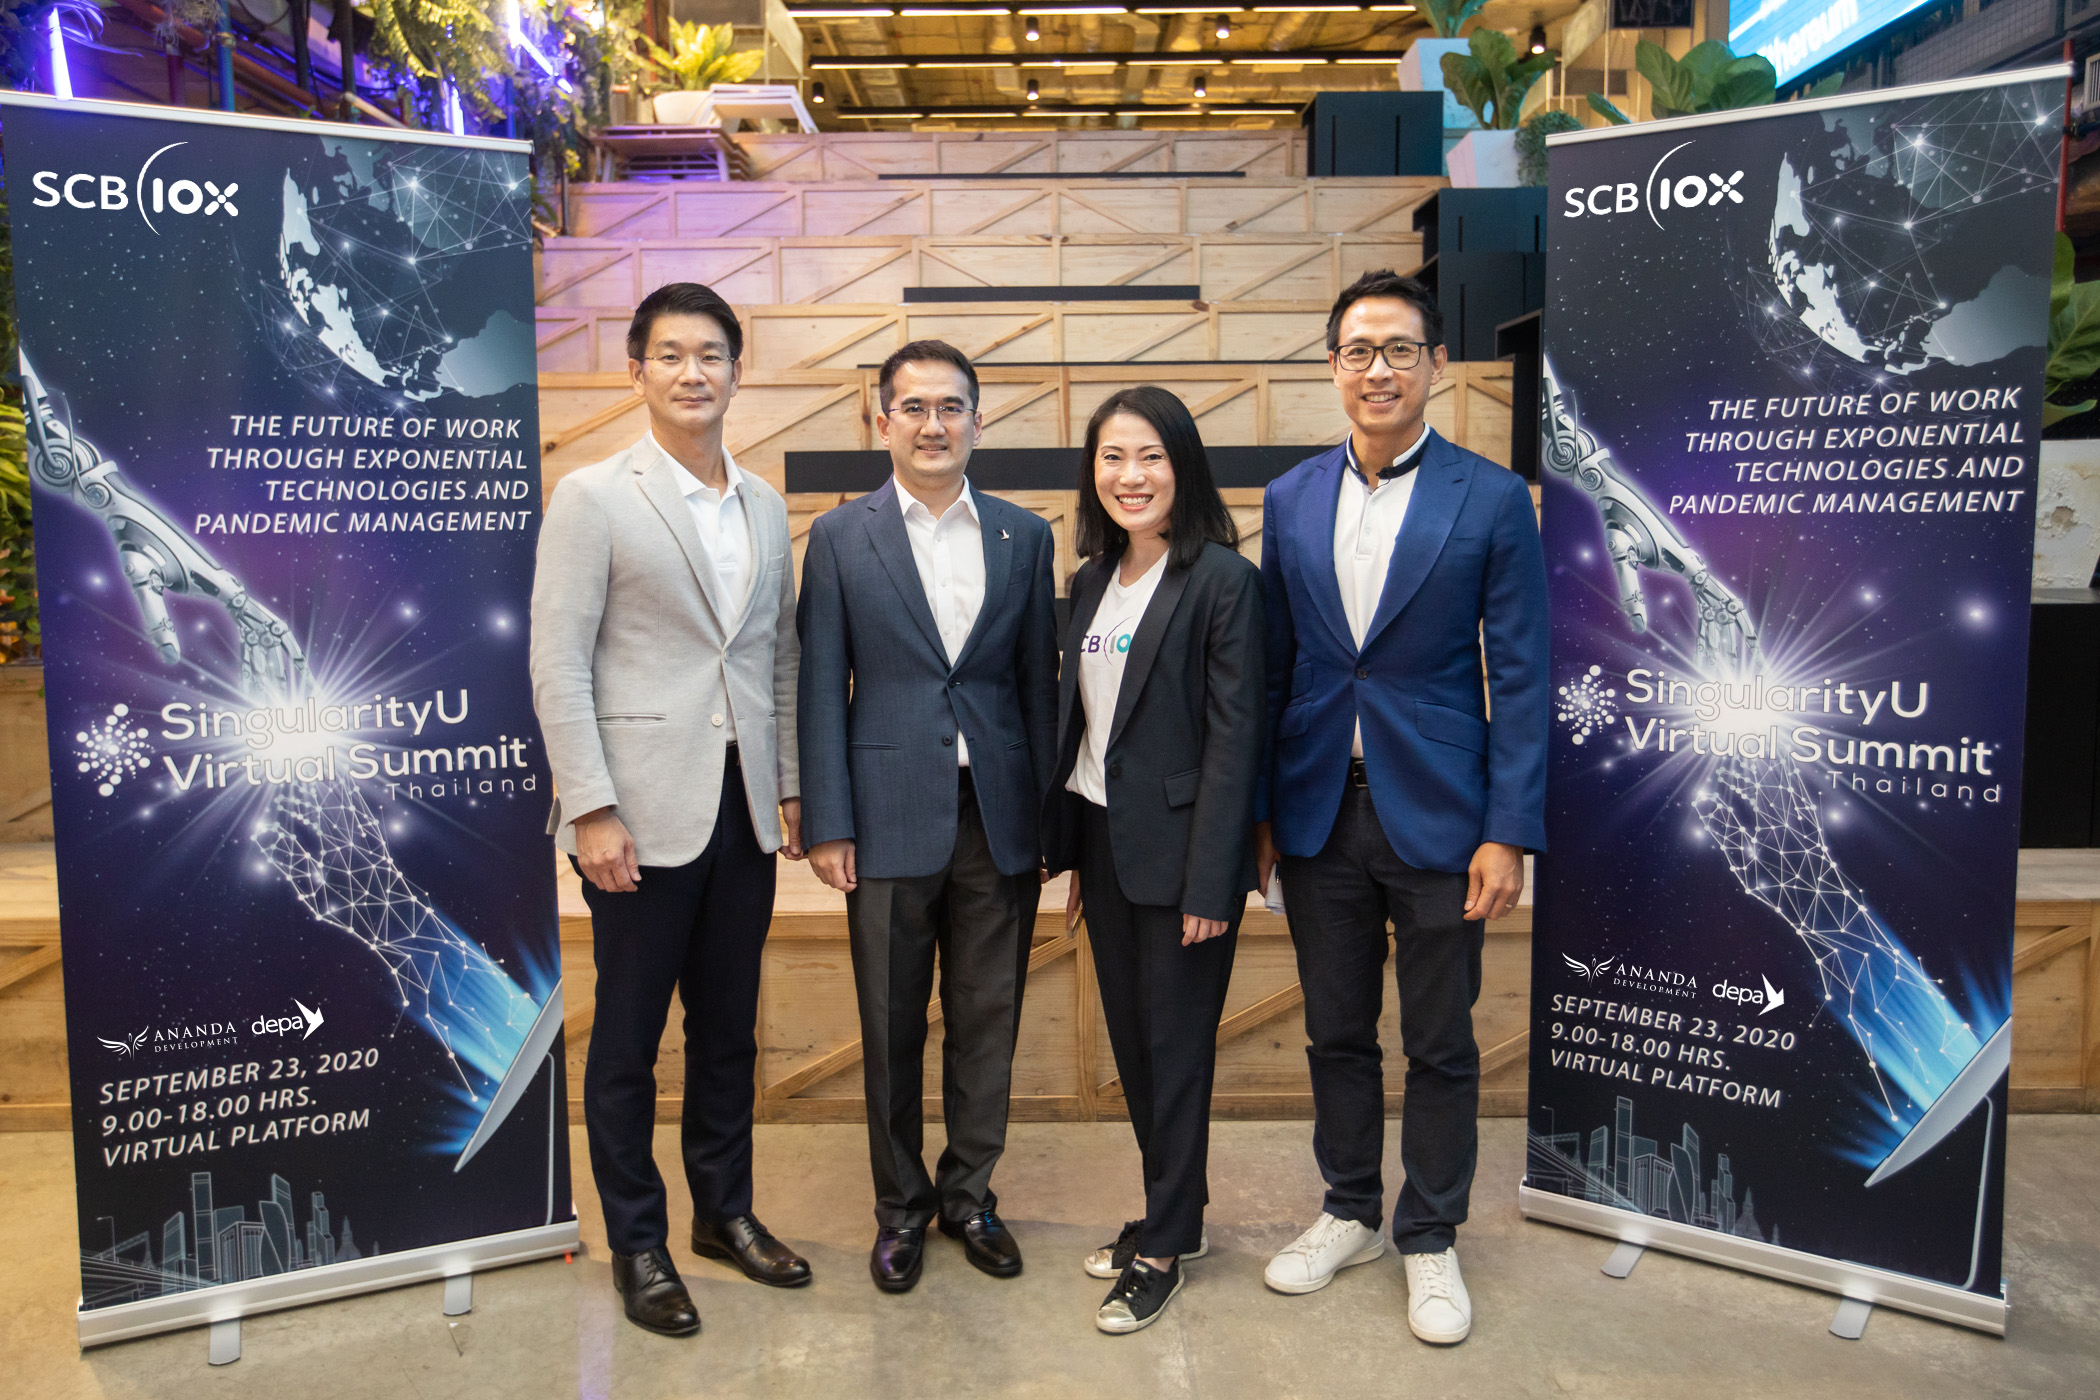 SingularityU Thailand ร่วมกับ SCB10X และ depa จัดงานพบปะผู้นำอุ่นเครื่อง งาน SingularityU Virtual Summit Thailand 2020 ที่จะจัดขึ้นในวันที่ 23